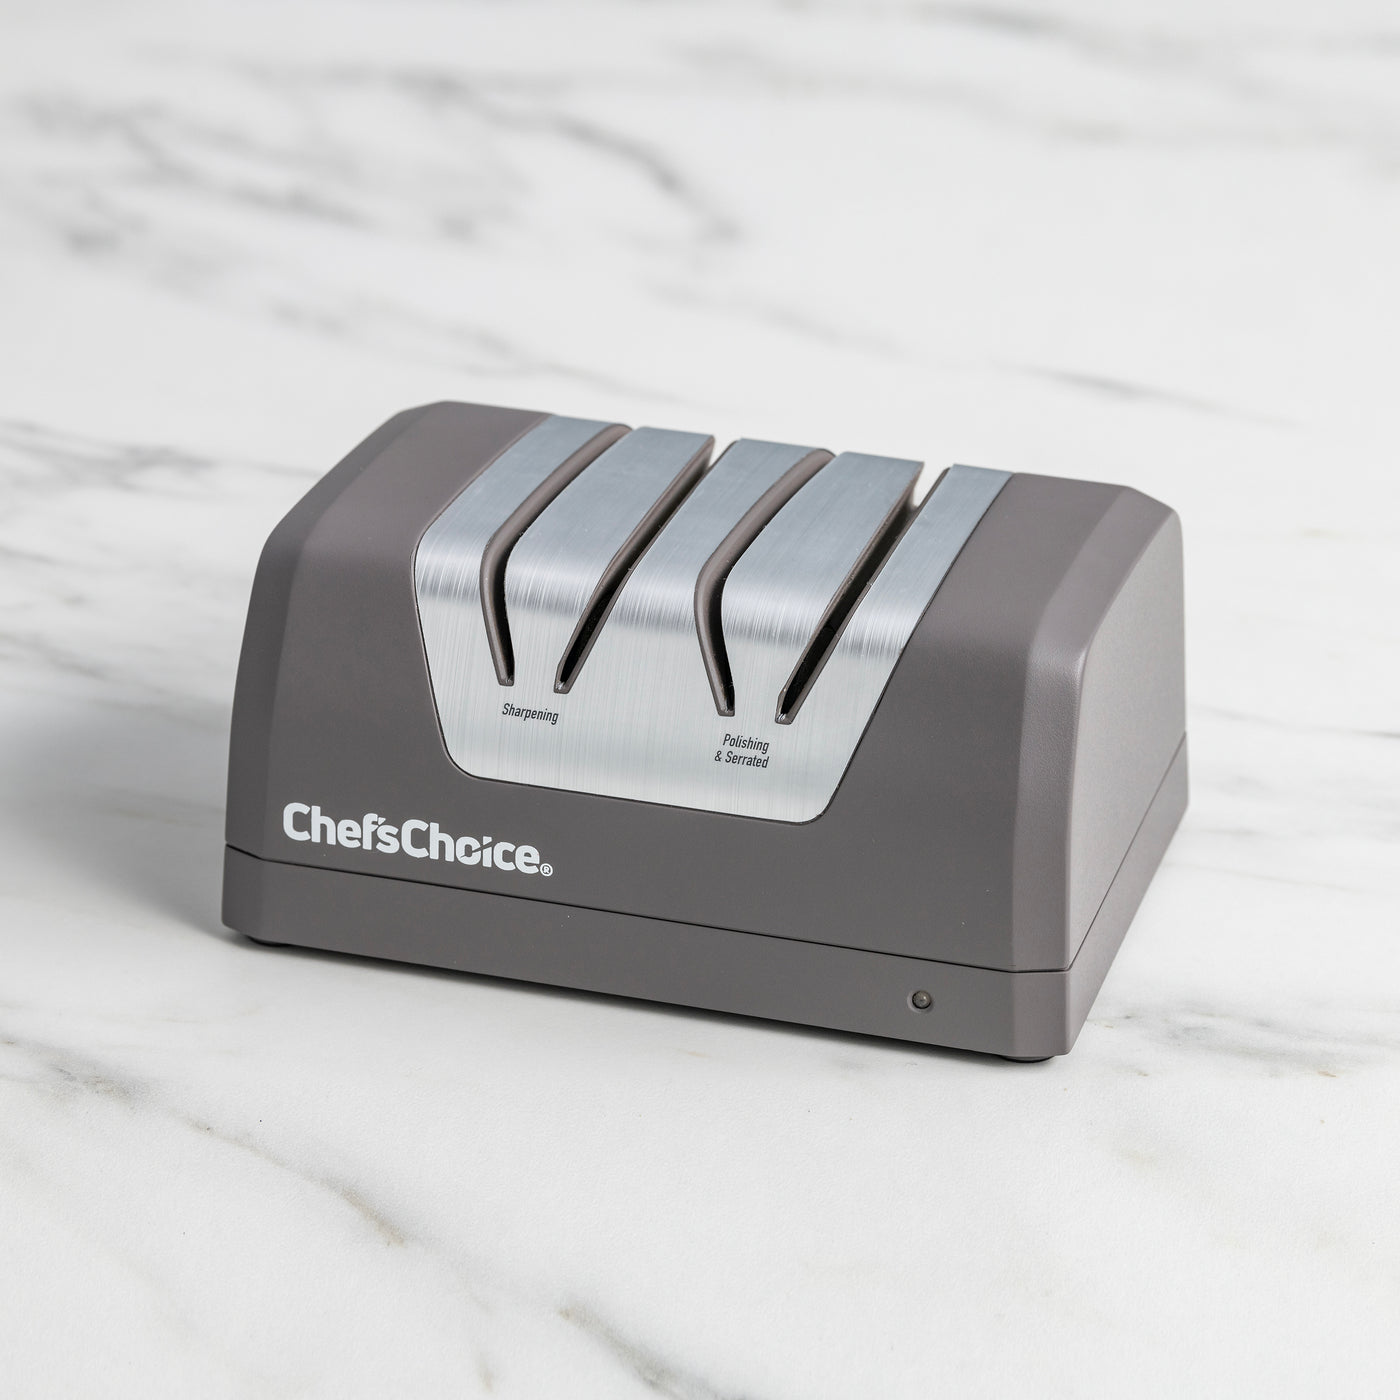 Chef's Choice CC312 knife sharpening machine  Advantageously shopping at